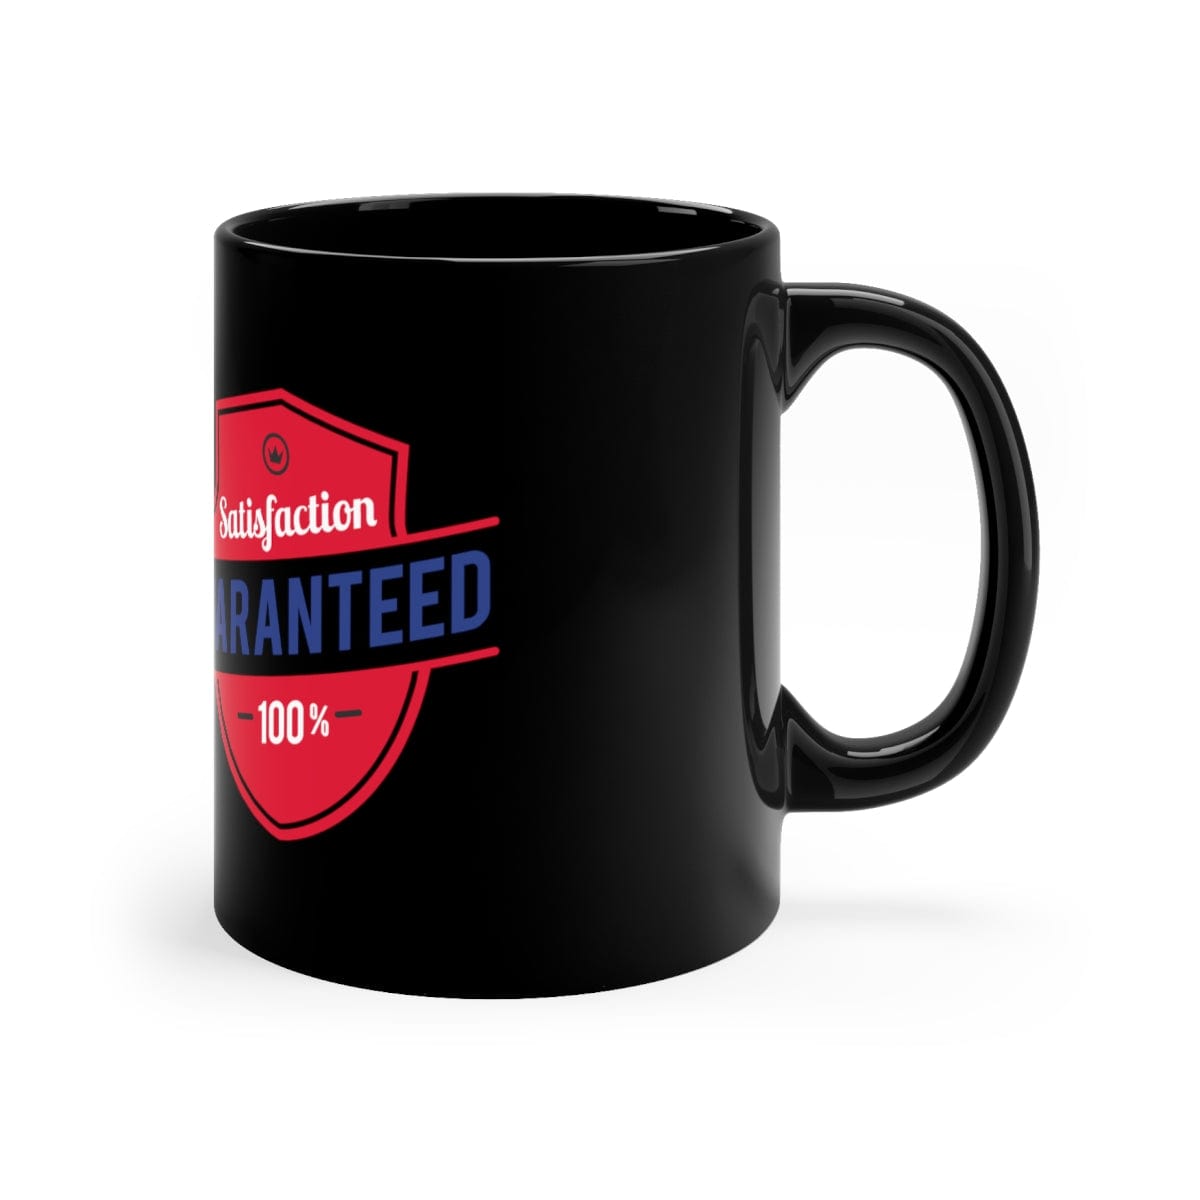 The 100% WTF Satisifaction Guaranteed Black Coffee Mug, Tea 11oz